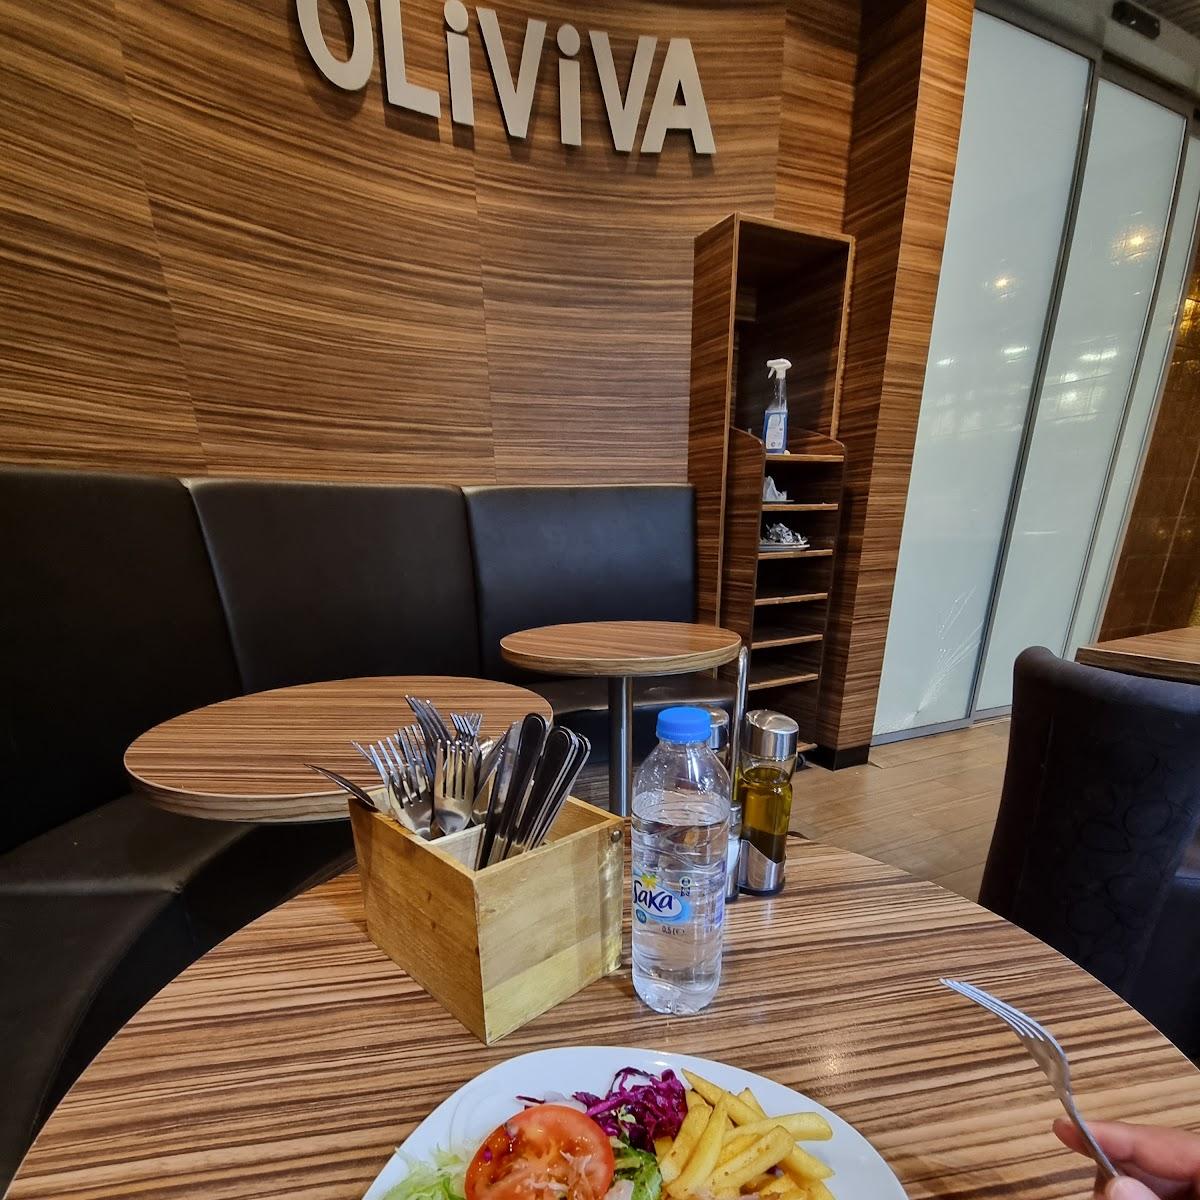 Restaurant "Oliviva" in München